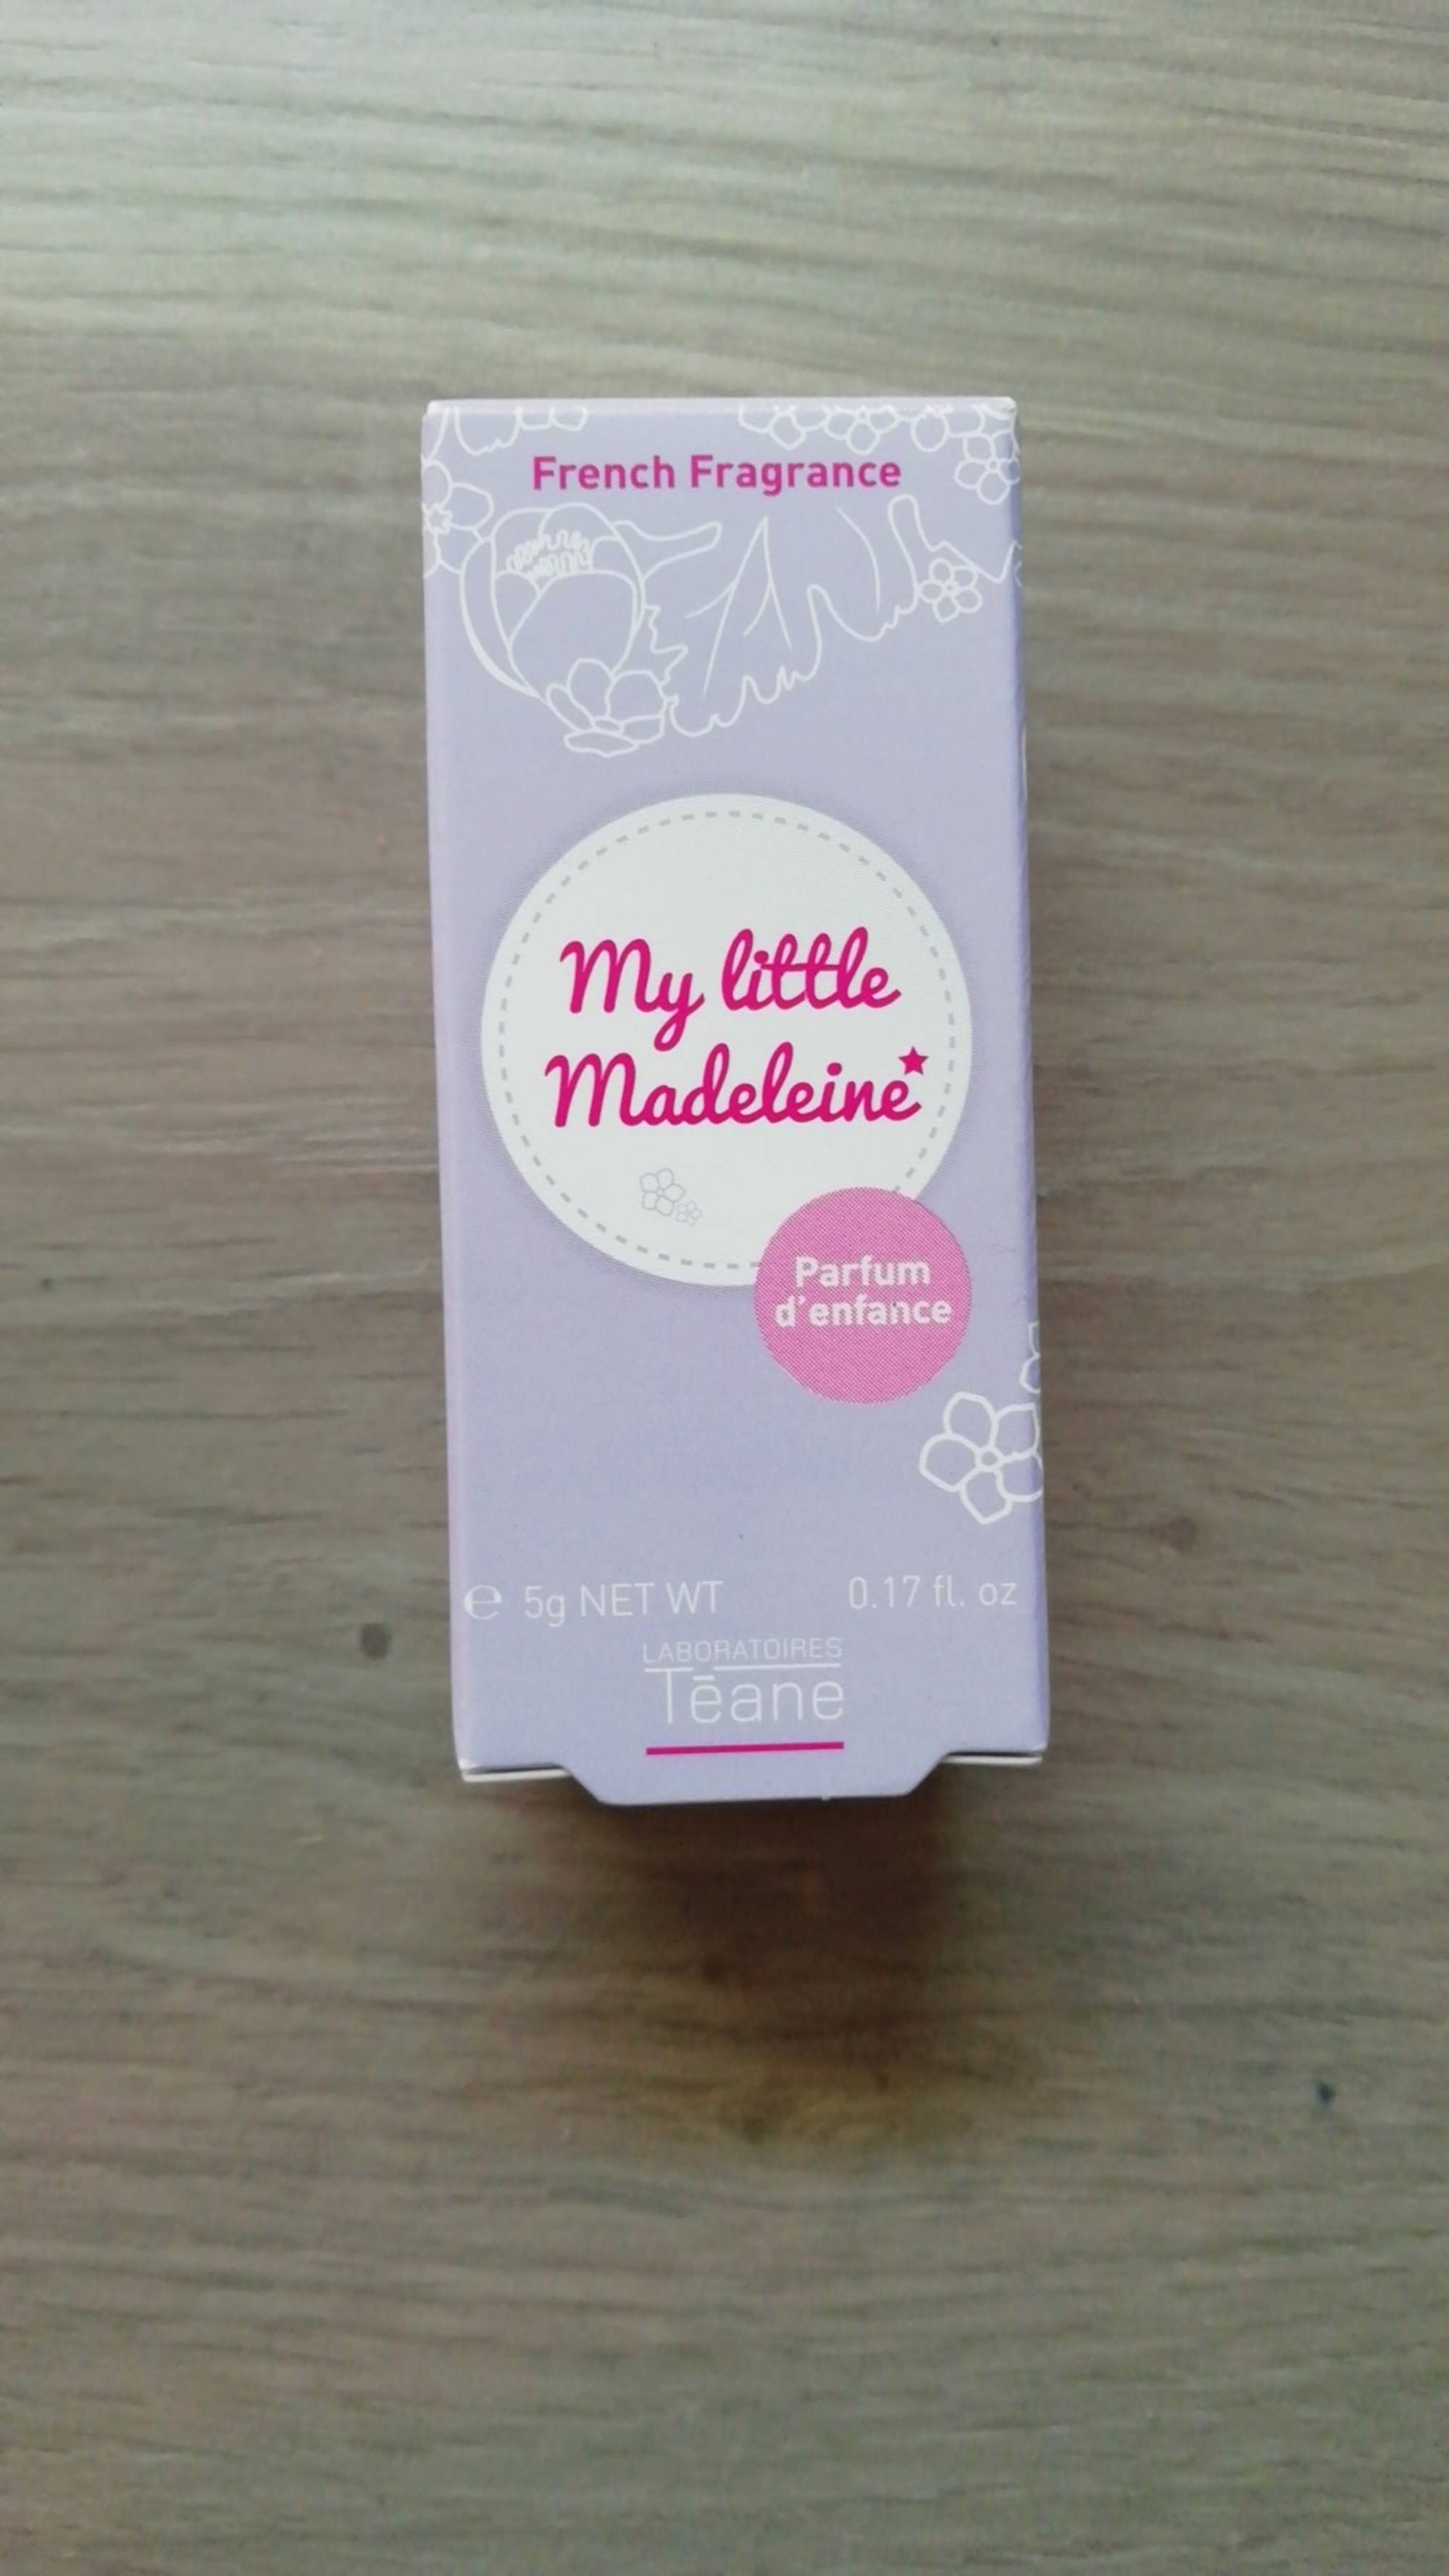 TÉANE - My little madeleine - Parfum d'enfance